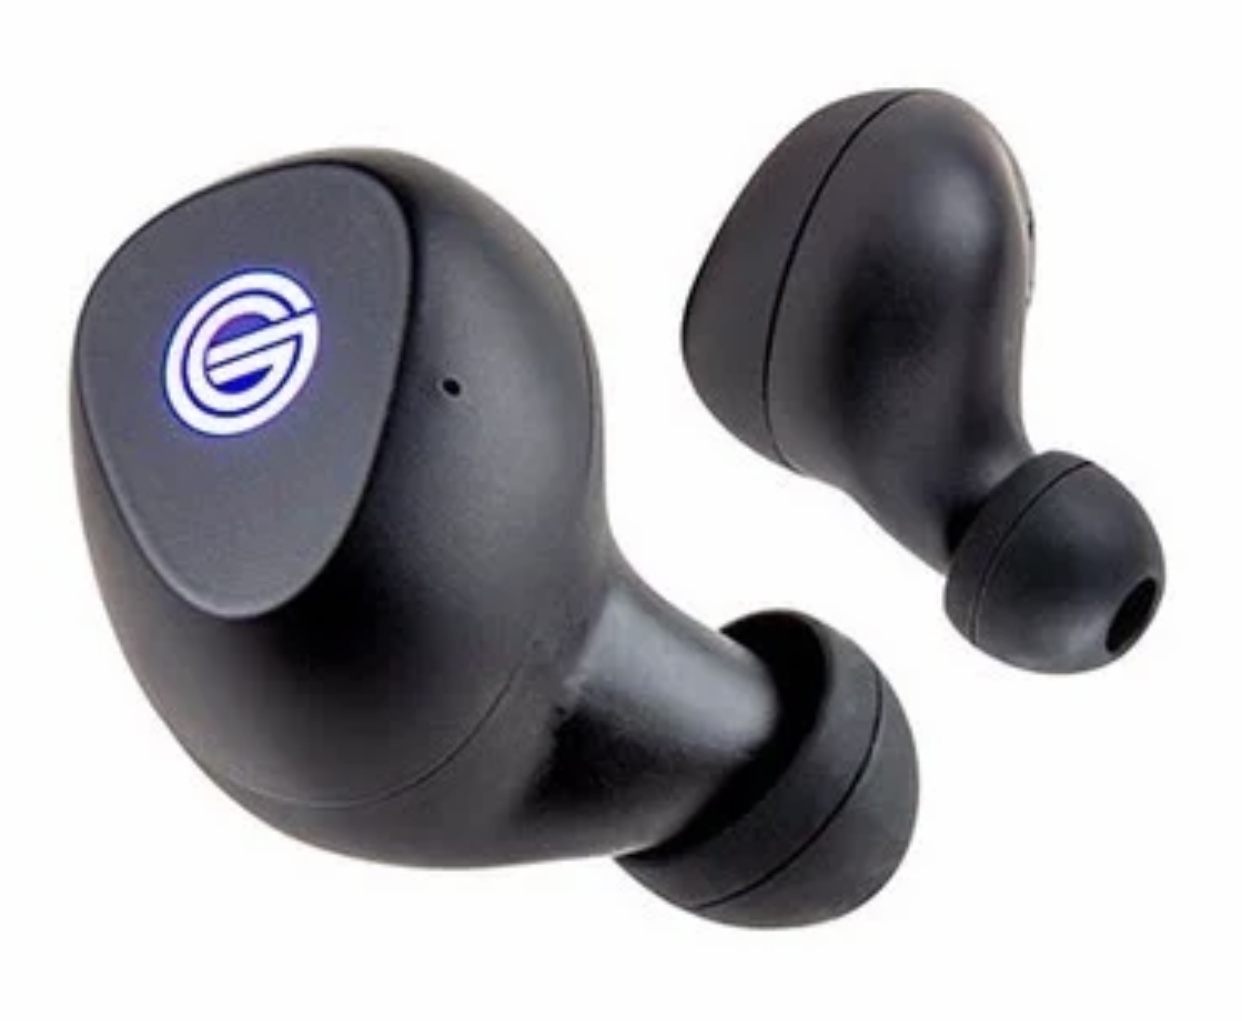 Grado FT220 Wireless earbuds deliver